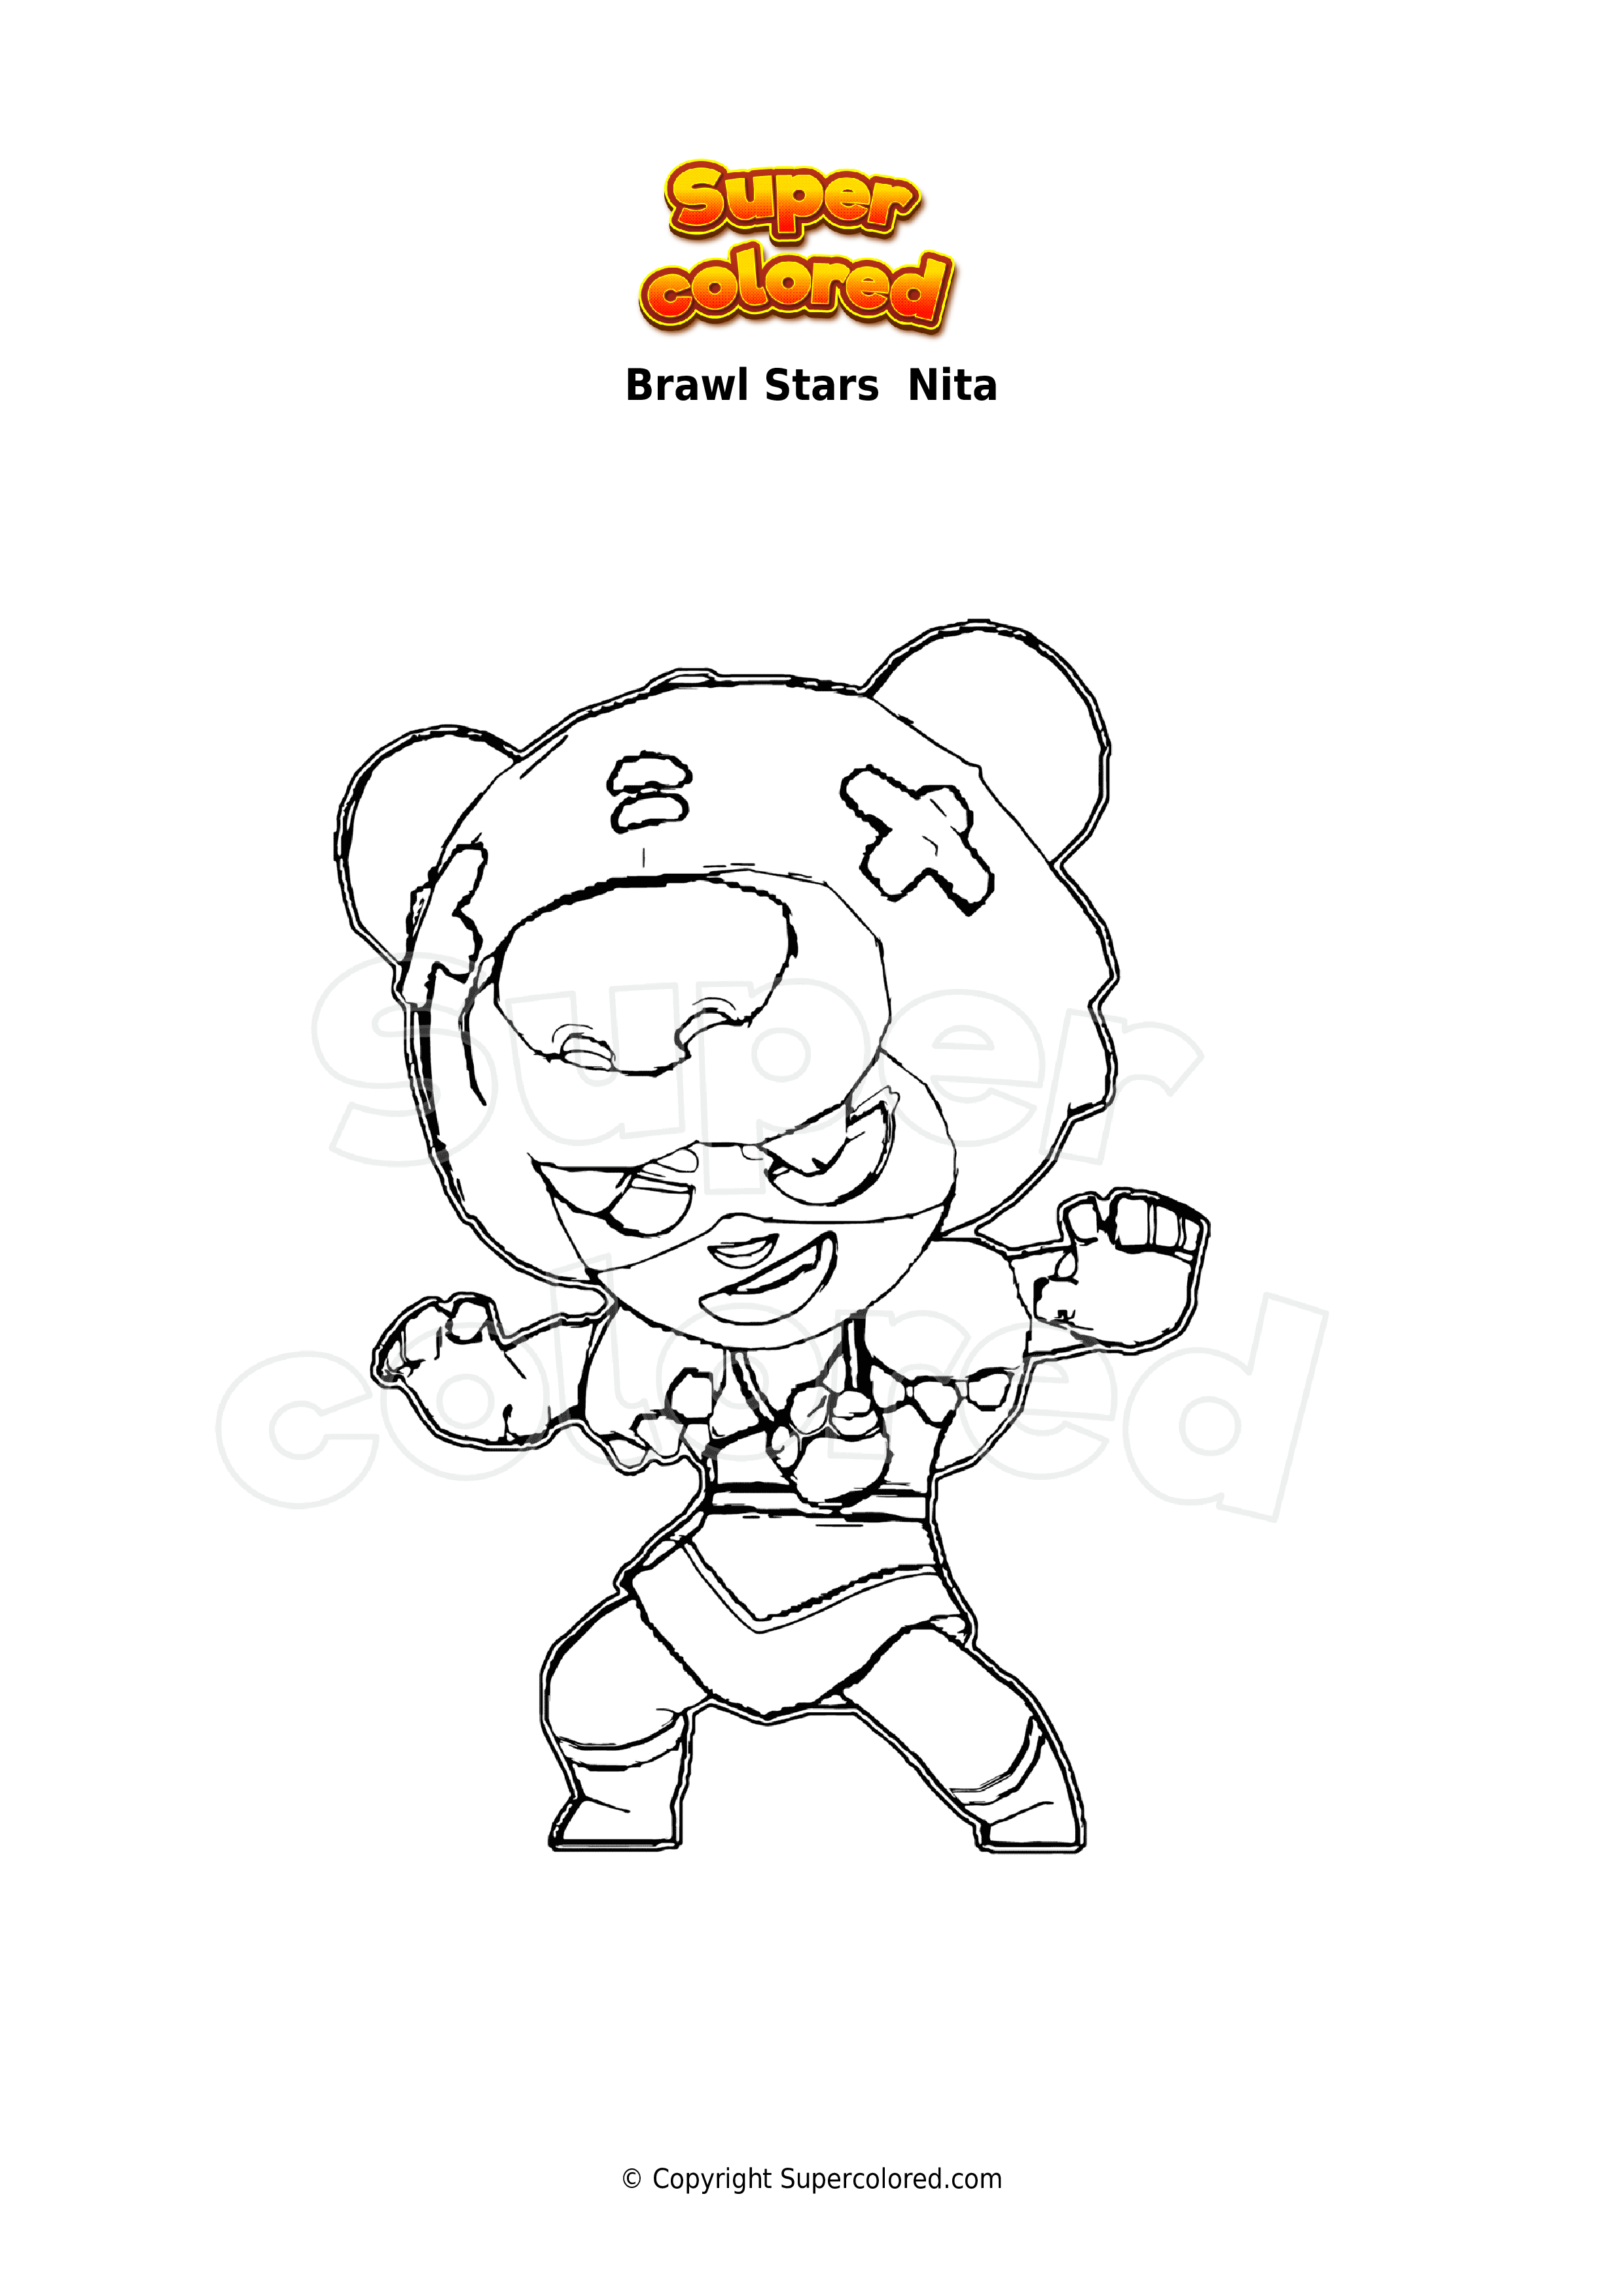 Dibujo Para Colorear Brawl Stars Nita Supercolored Com - dibujos para colorear de brawl stars colette